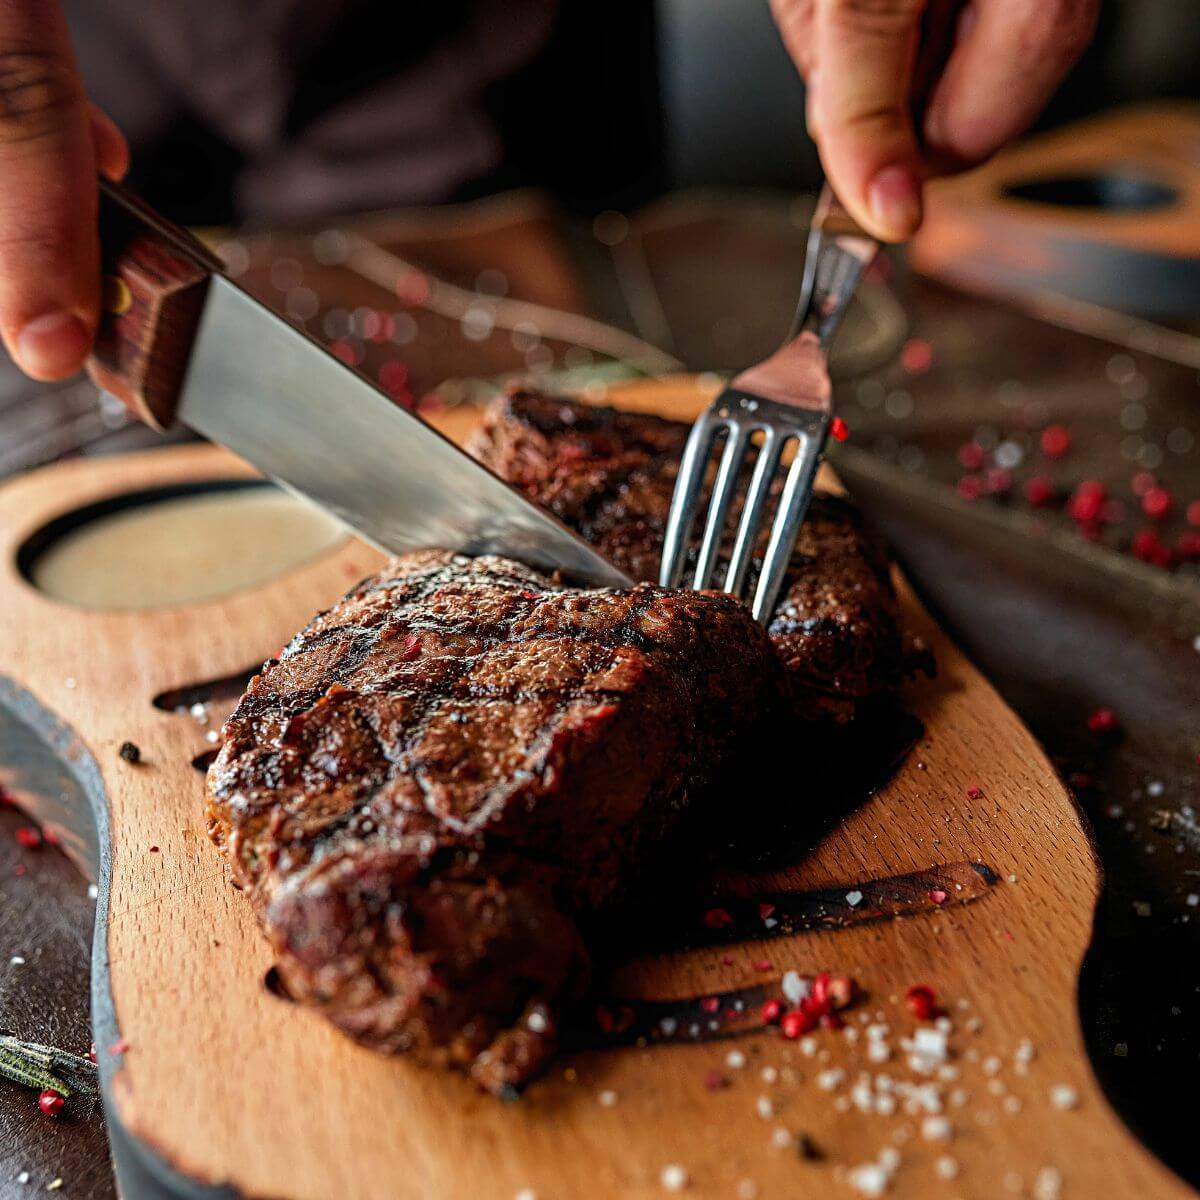 texas roadhouse steak being cut into